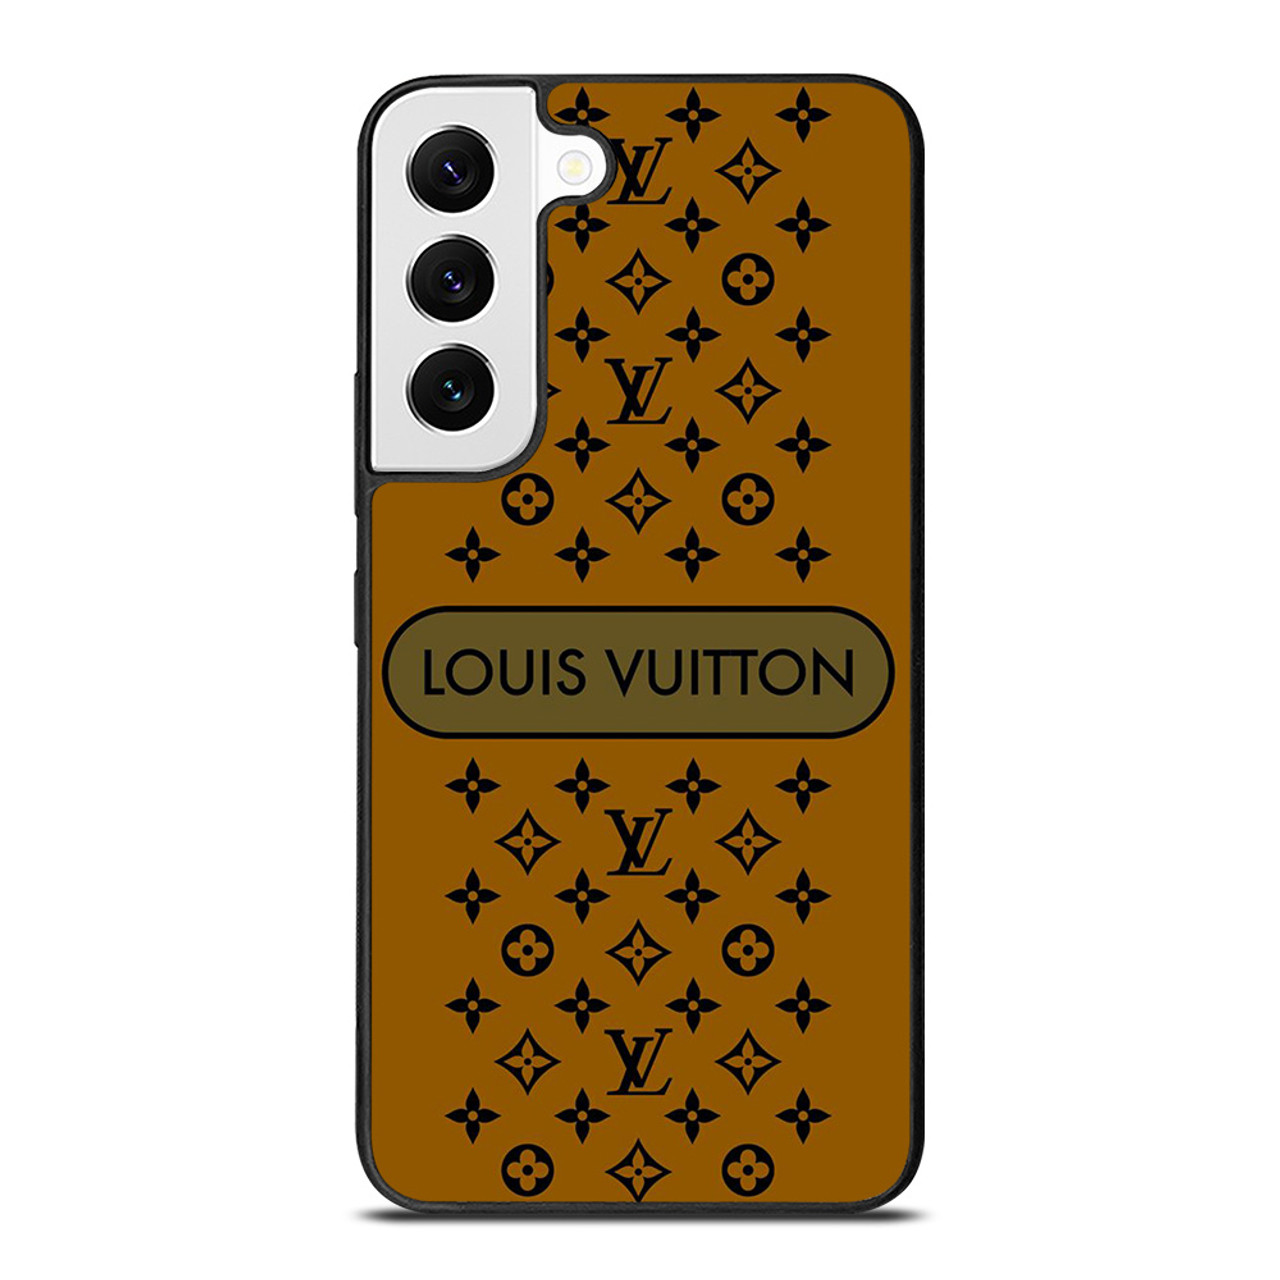 LV LOUIS VUITTON PATTERN LOGO Samsung Galaxy S22 Plus Case Cover